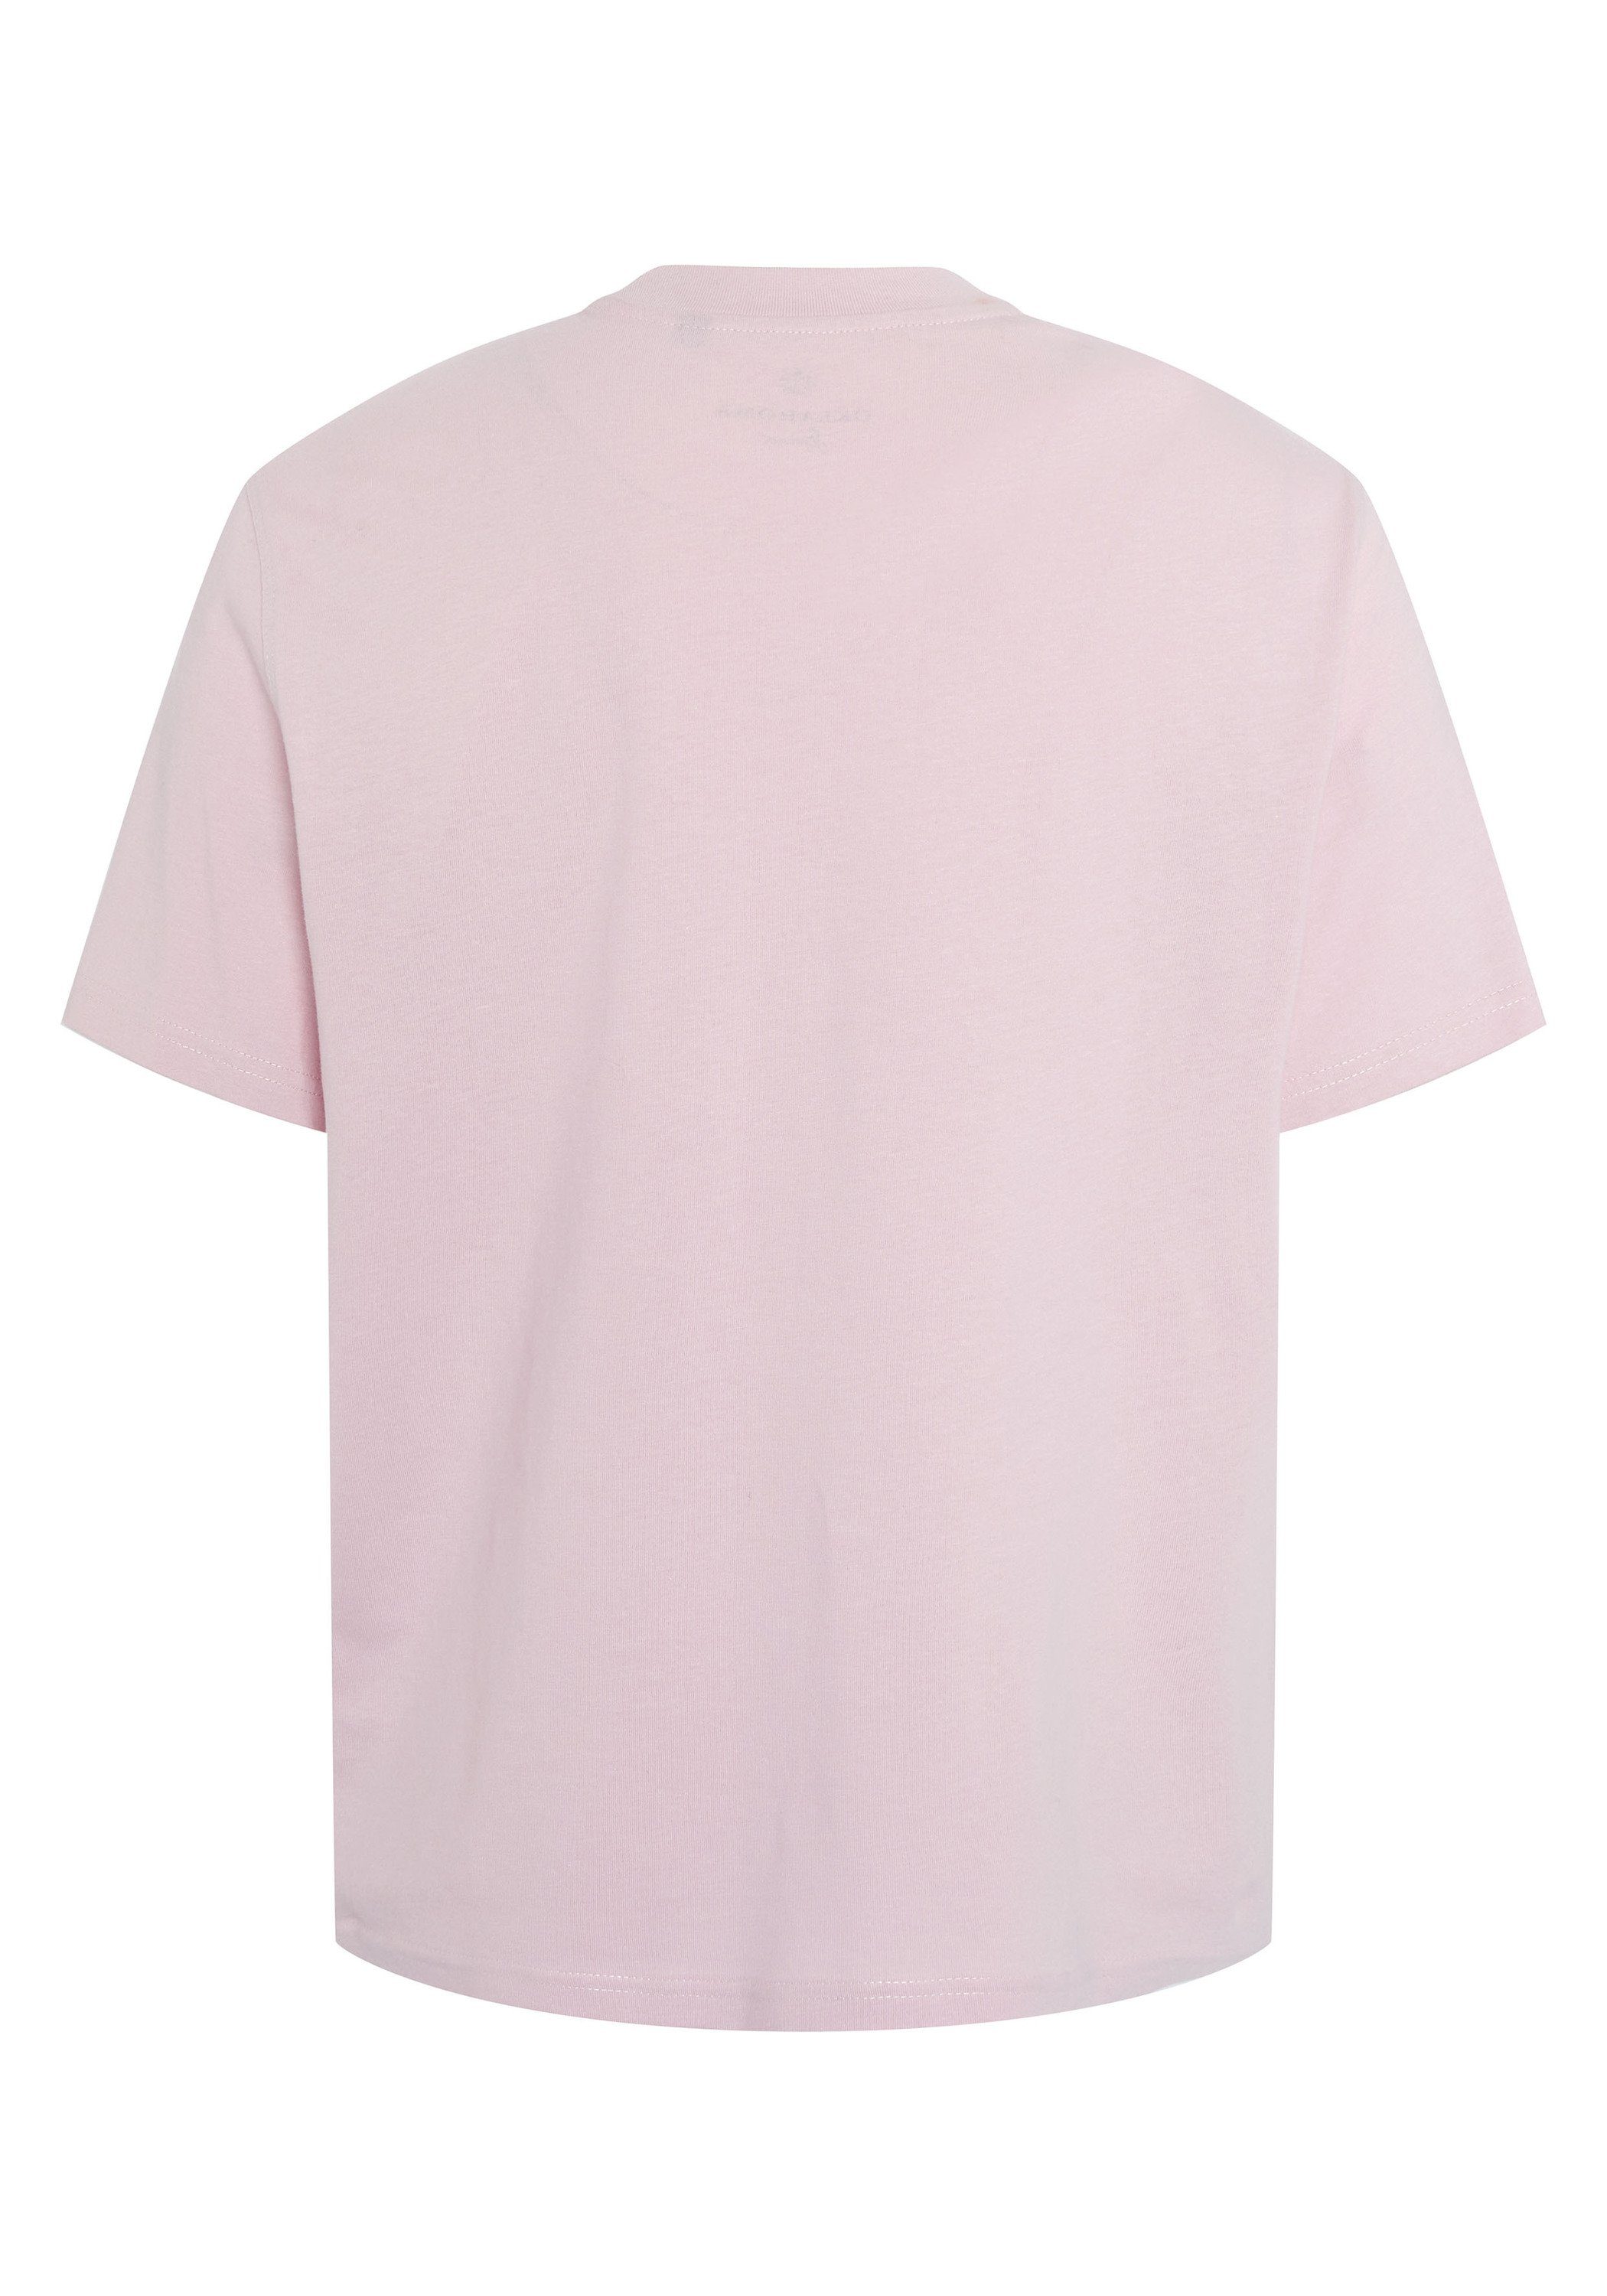 Oklahoma Jeans Print-Shirt Desert-Motiv Nectar 14-2305 mit Pink